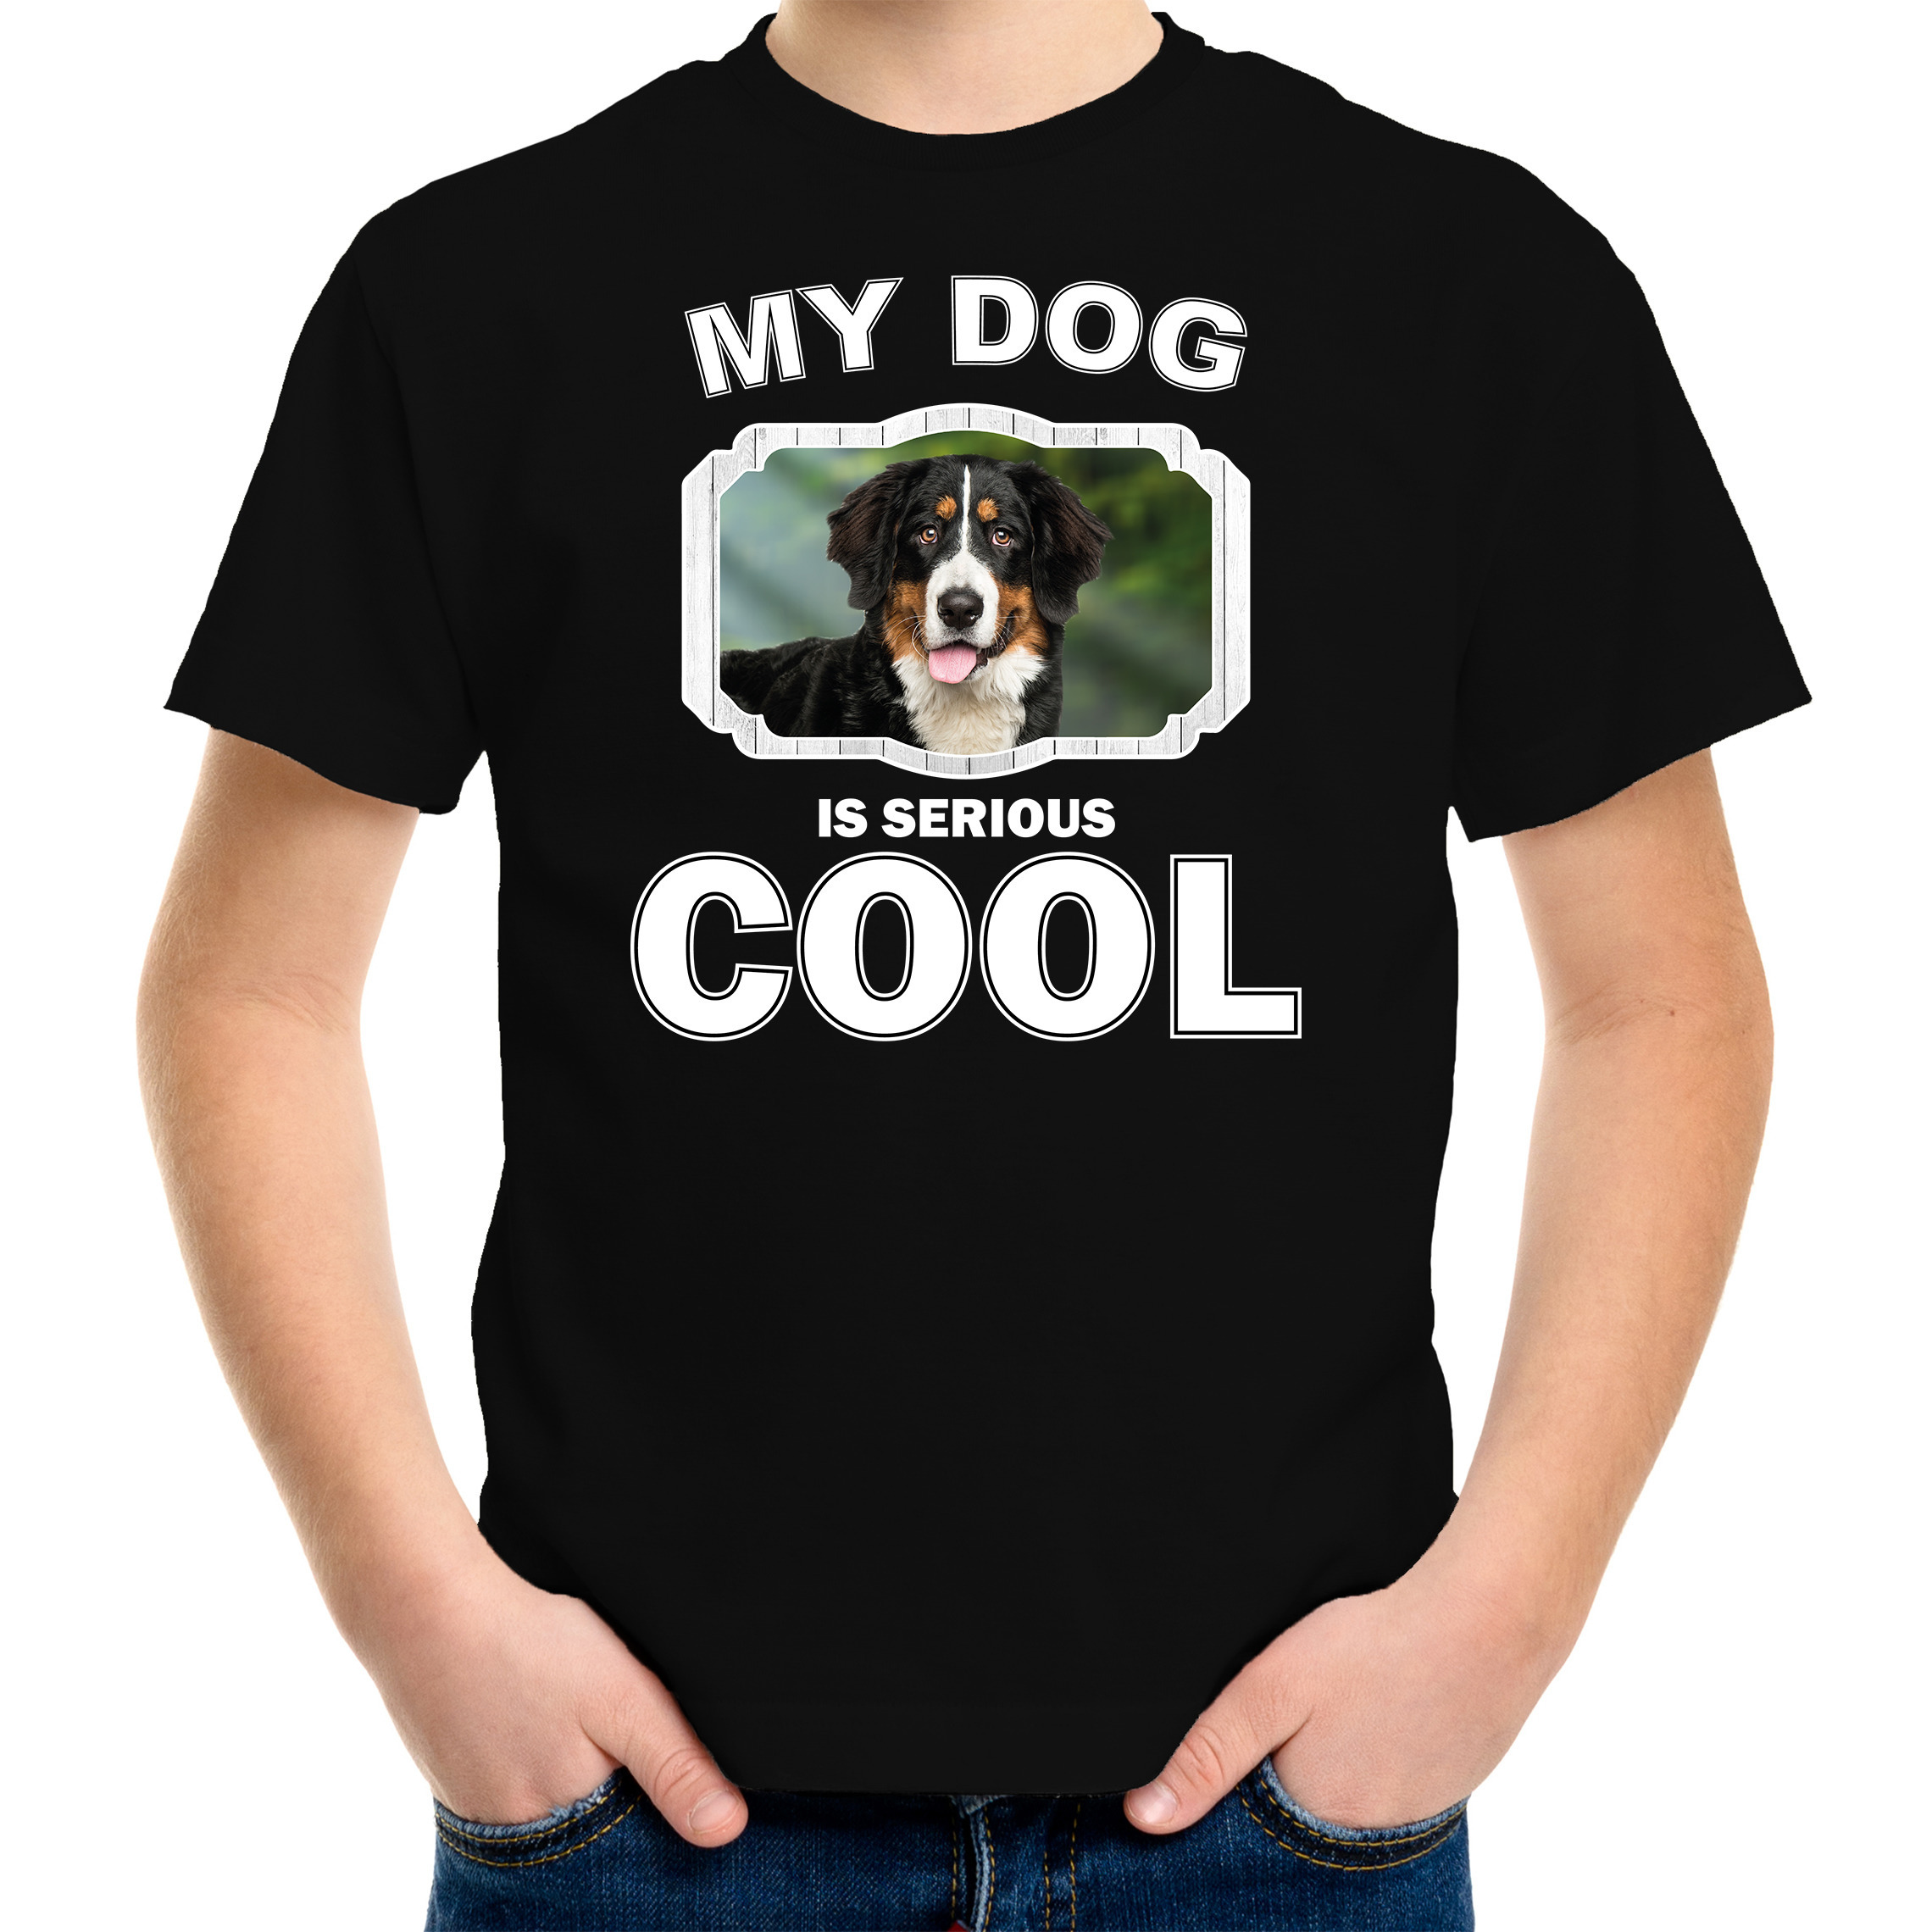 Berner sennen honden t-shirt my dog is serious cool zwart voor 